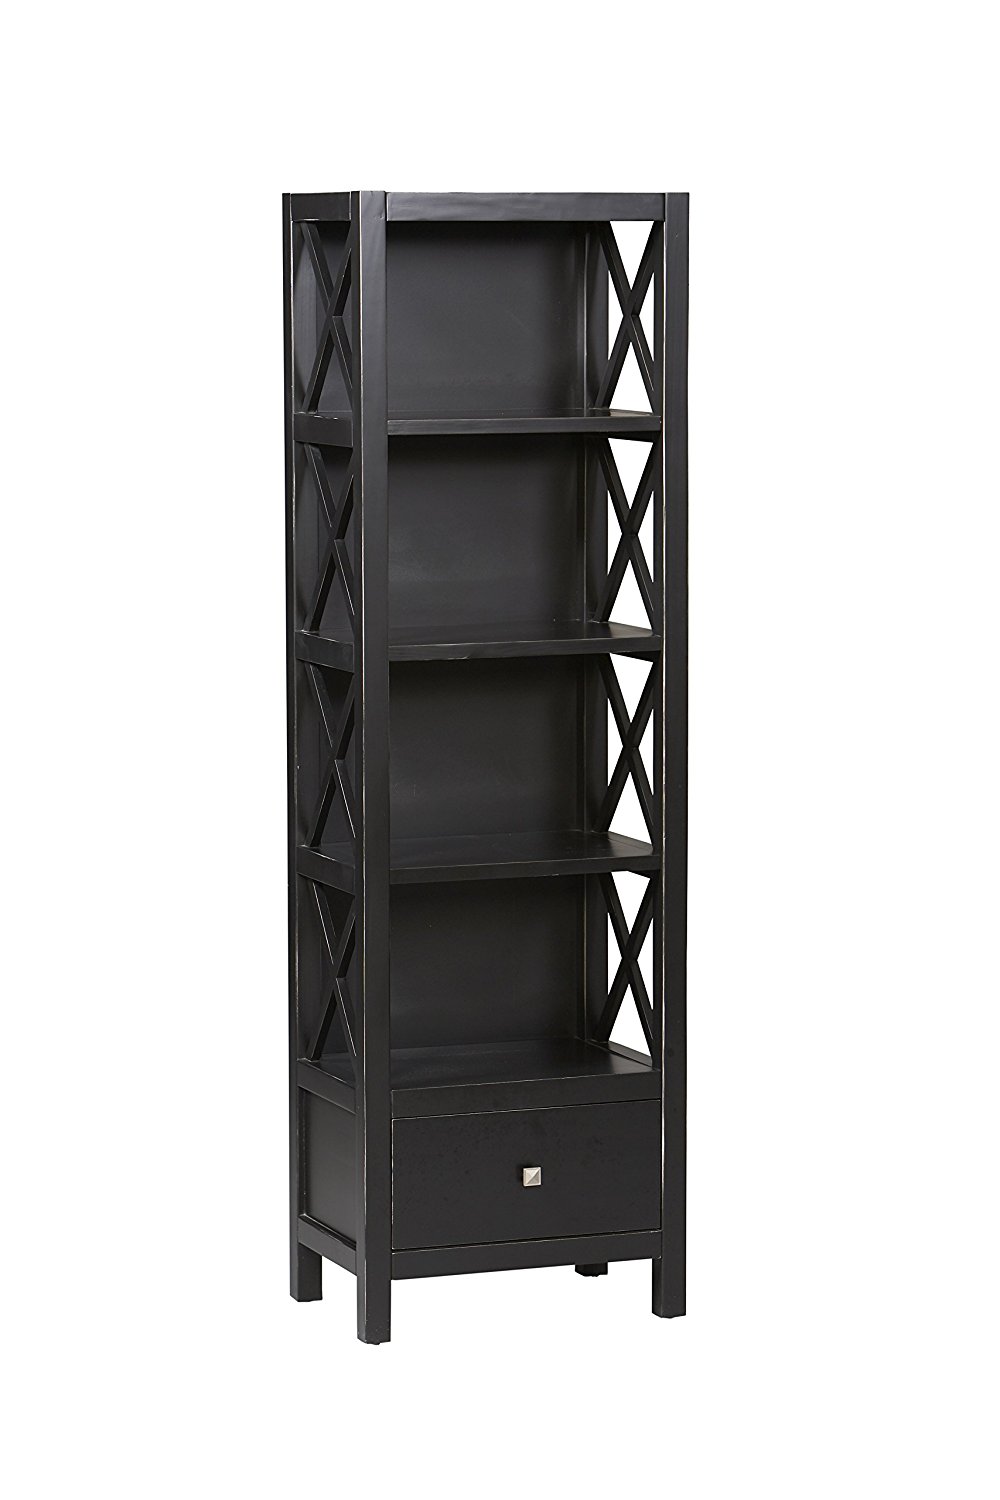 tall bookcase amazon.com: linon anna collection tall narrow 5-shelf bookcase: kitchen u0026  dining YITBFLE